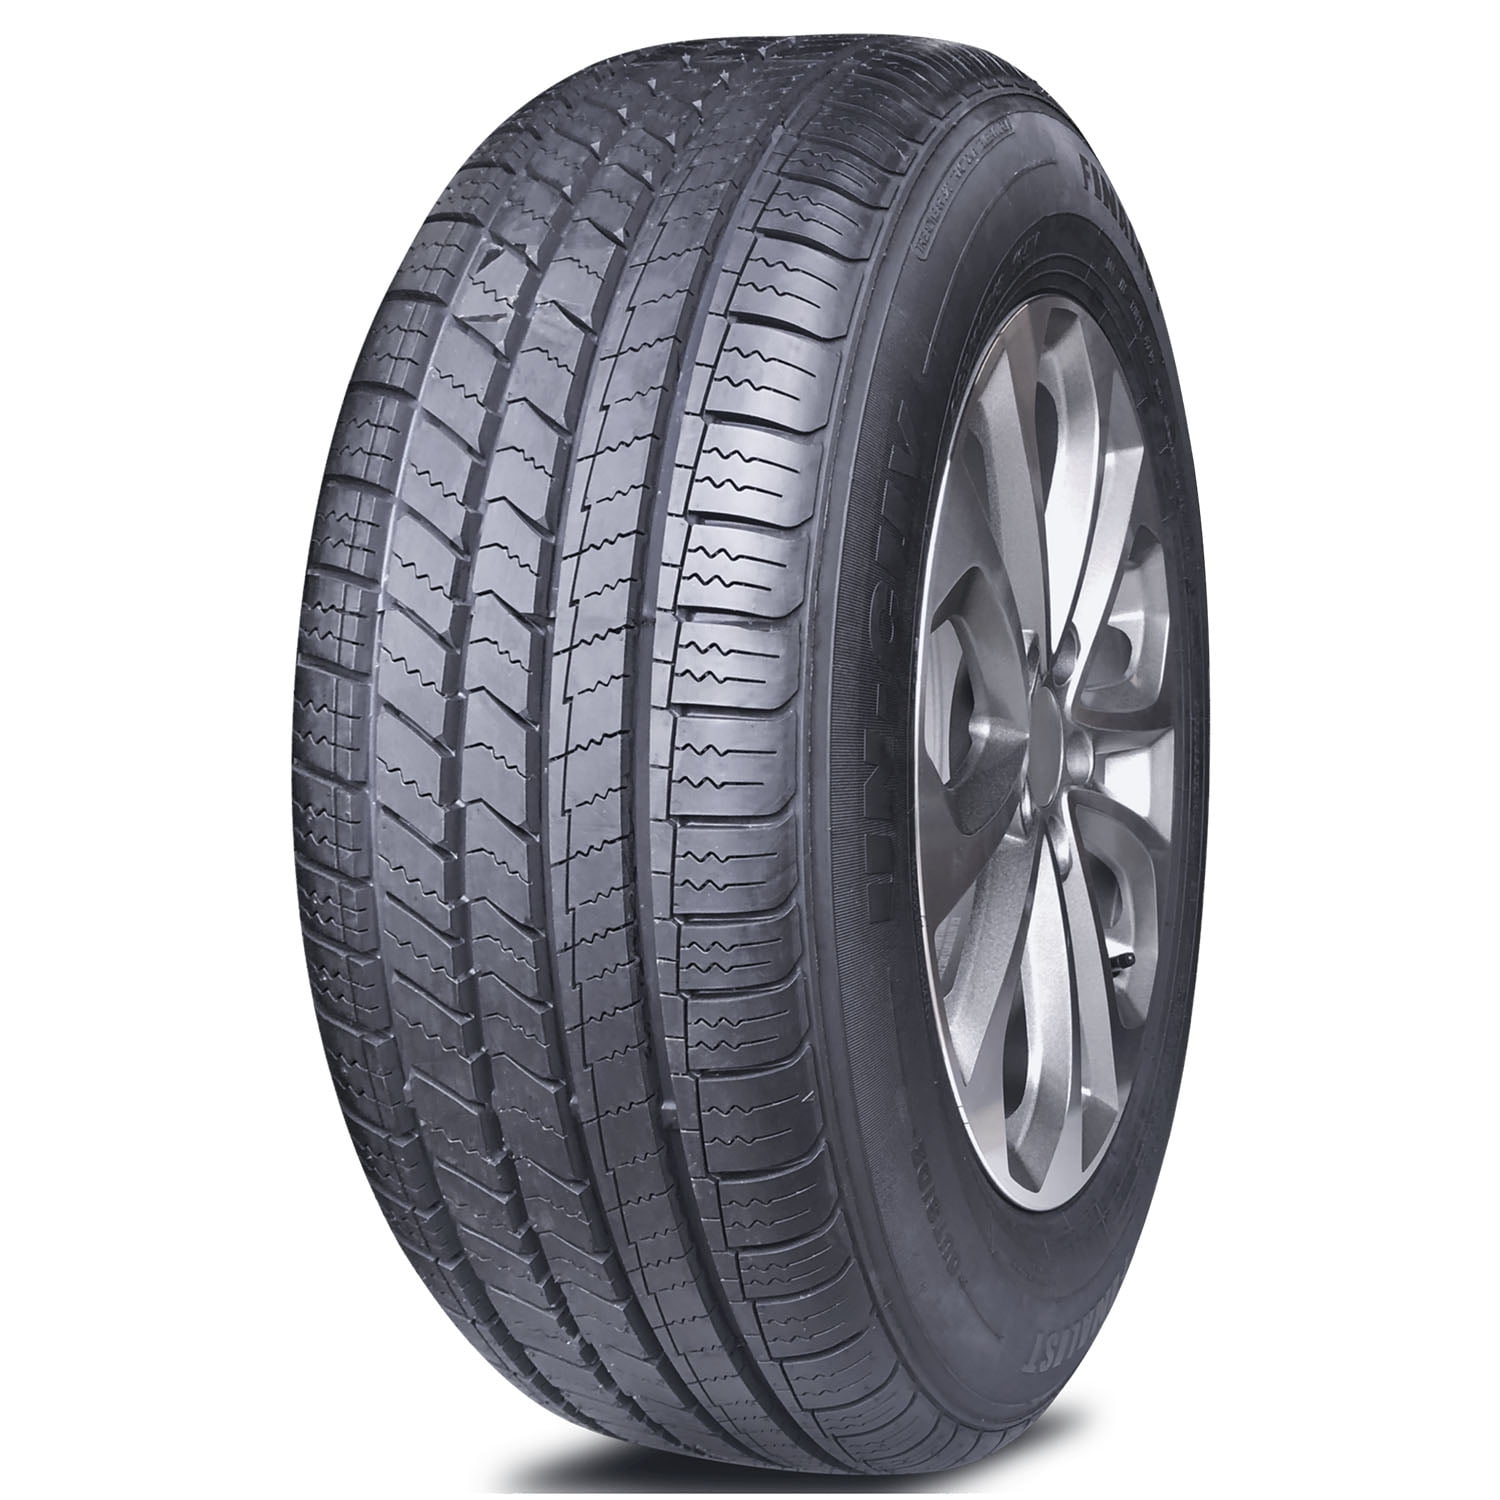 Goodyear Ultra Grip 9+ (Plus), Winter Tire - Mazda Shop